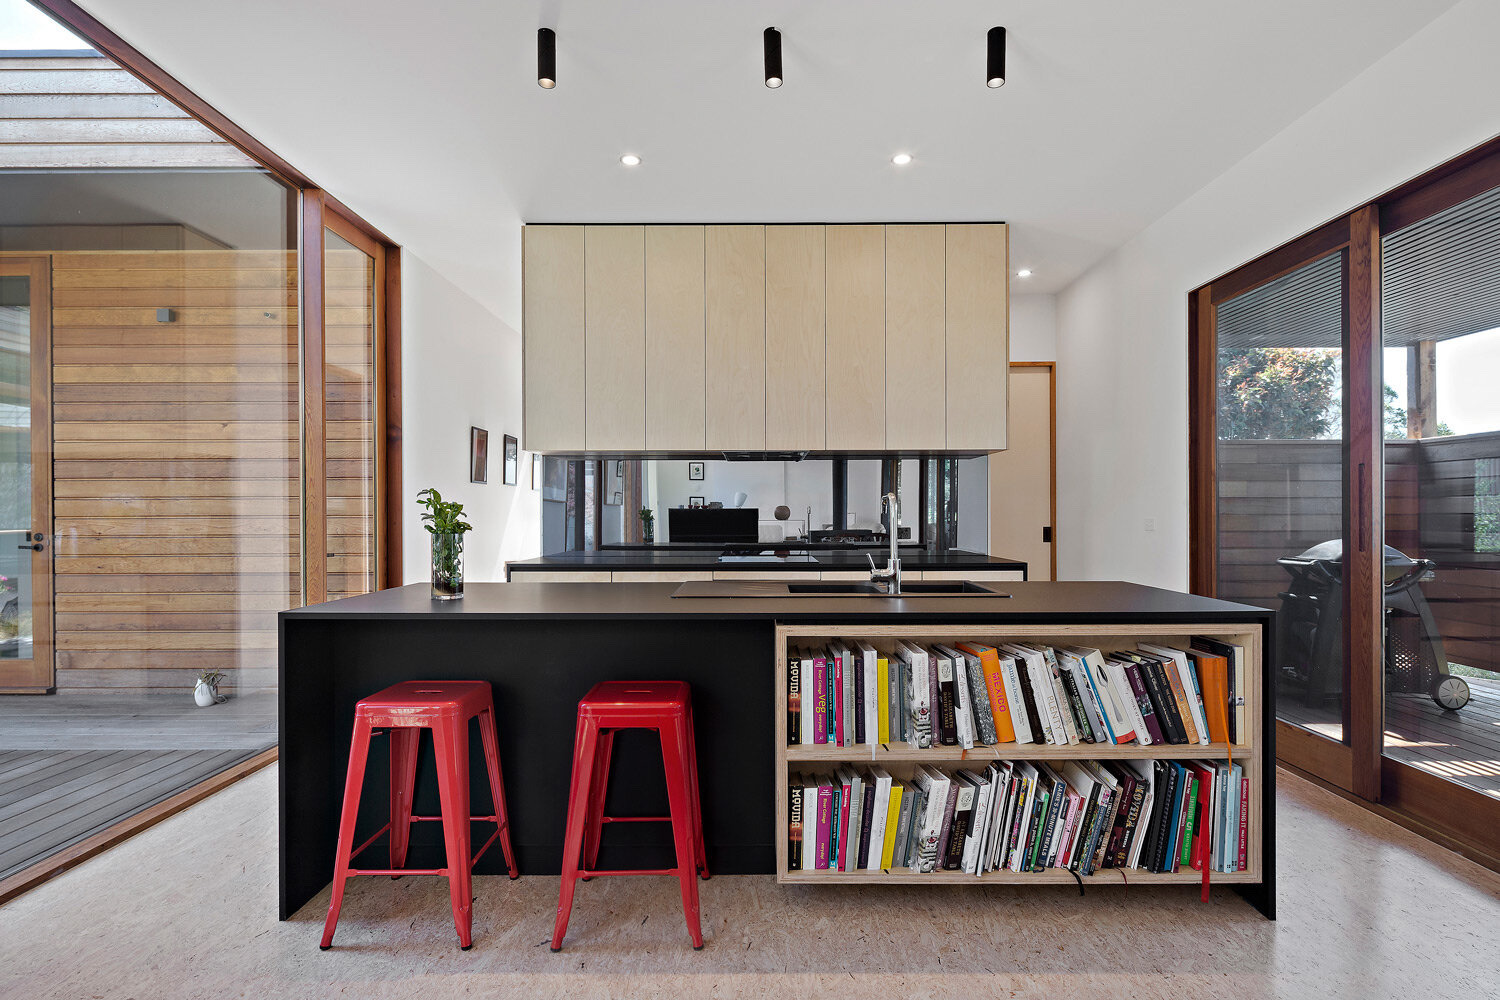 prefabnsmallhomes:‘The Courtyard Retreat’ modular house, Bellarine Peninsula, VIC, Australia by ARKit